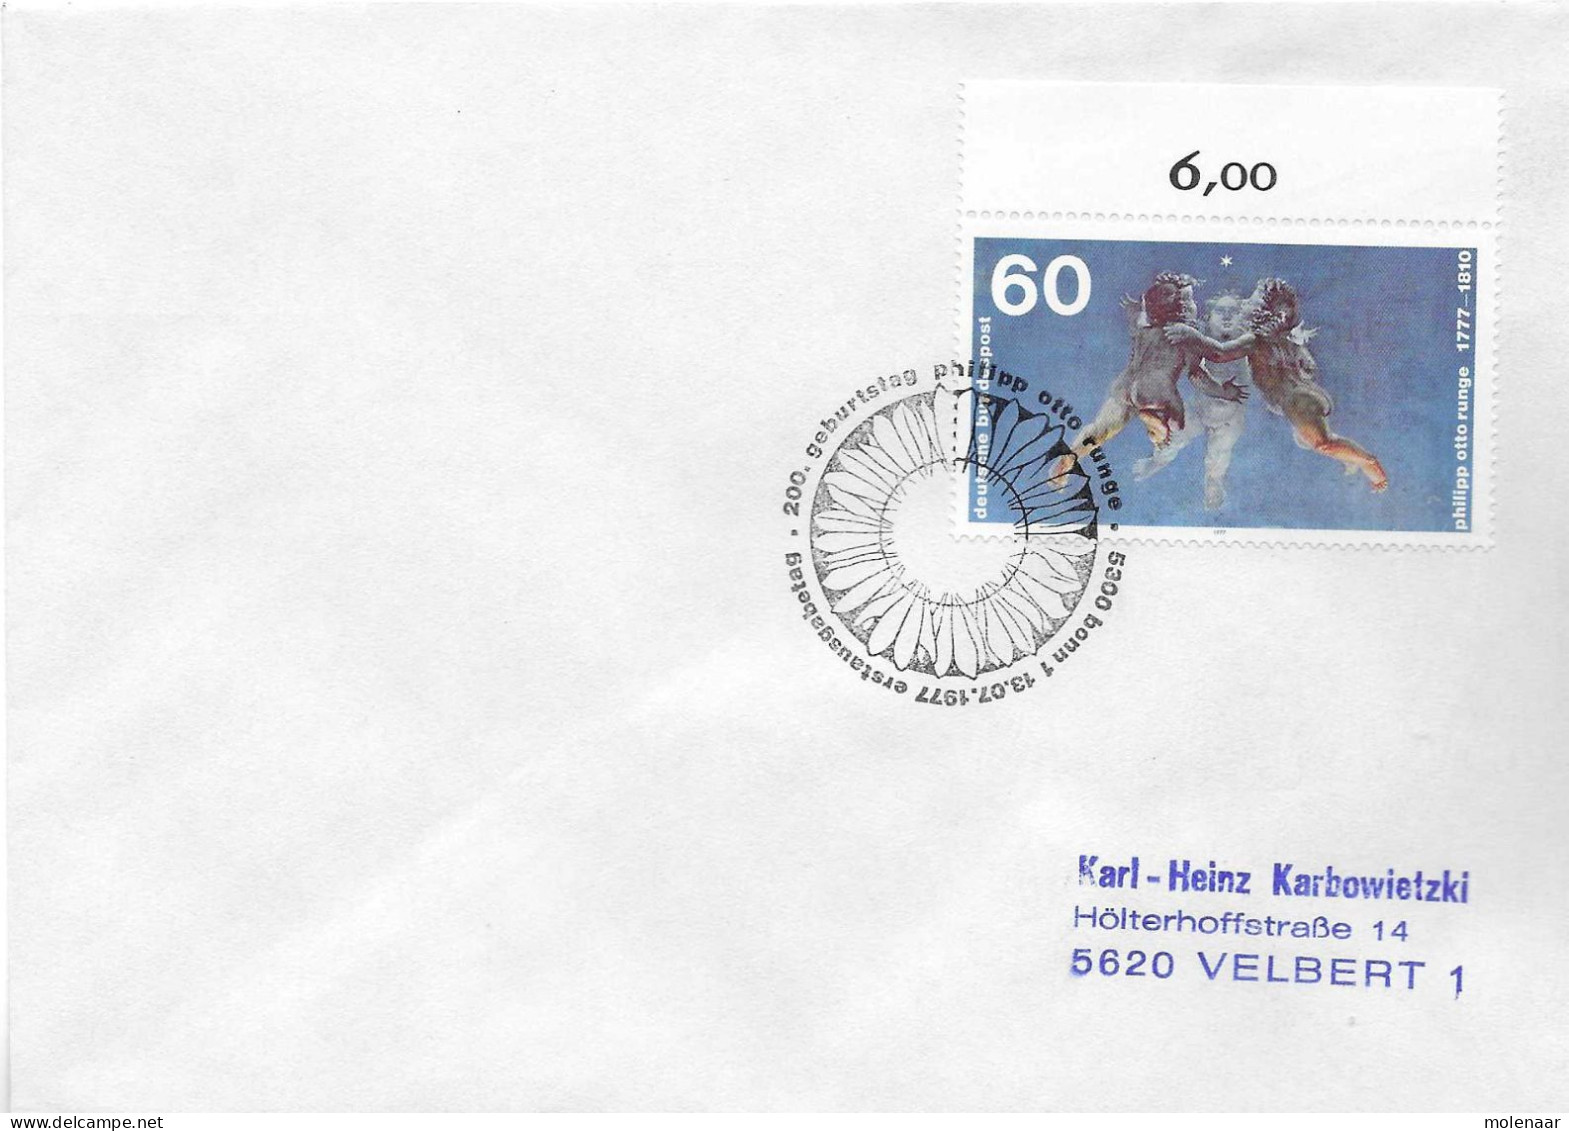 Postzegels > Europa > Duitsland > West-Duitsland > 1970-1979 > Brief Met No. 940 (17377) - Covers & Documents